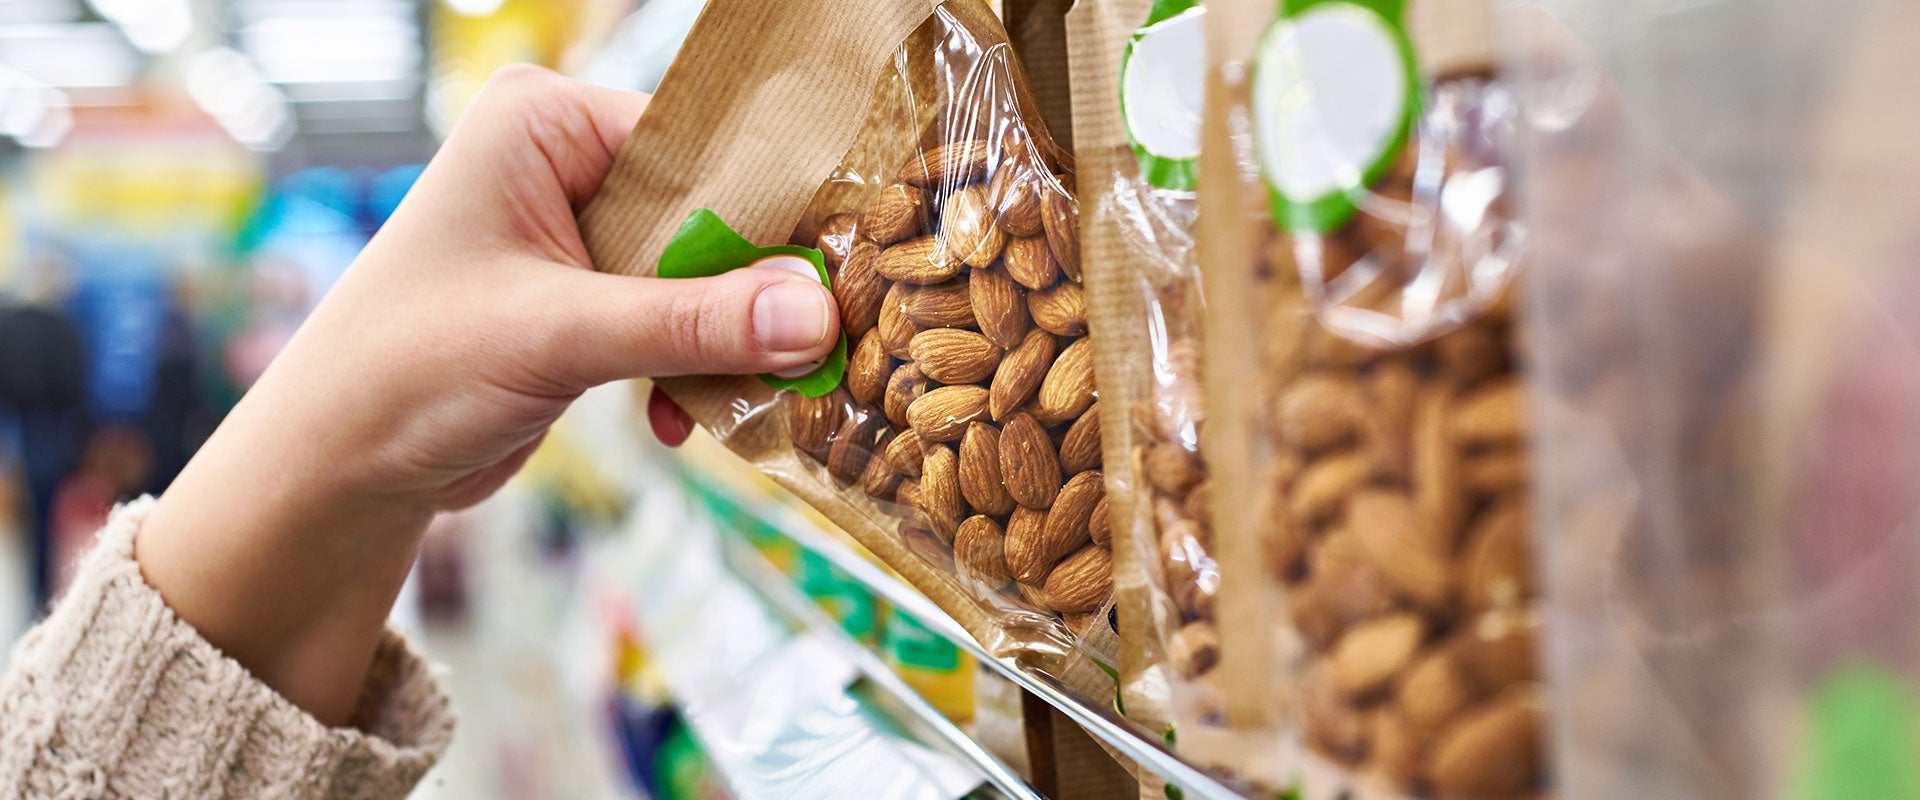 taking bag of almonds off shelf